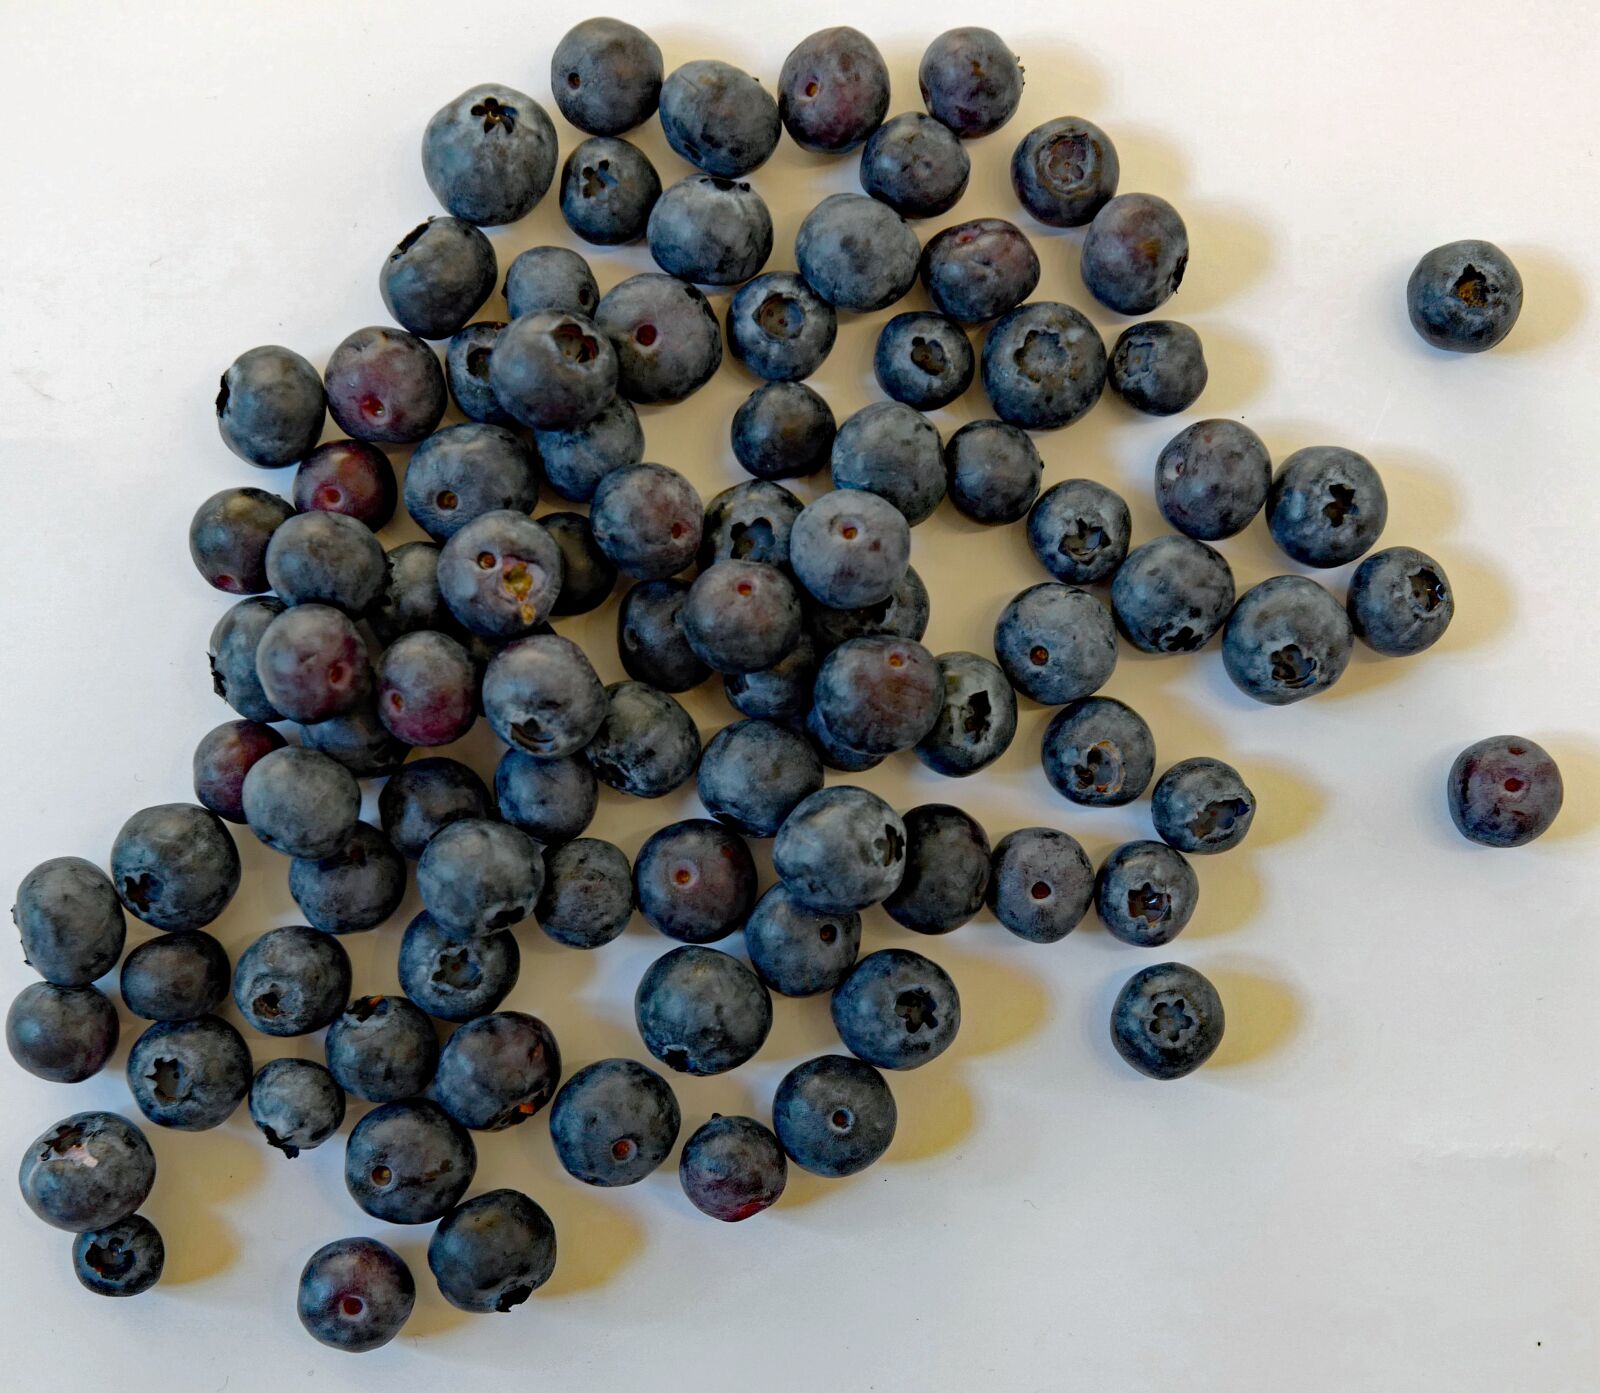 Super-Vario-Elmar-TL  1:3.5-4.5 / 11-23 ASPH. sample photo. Blueberry, berry photography